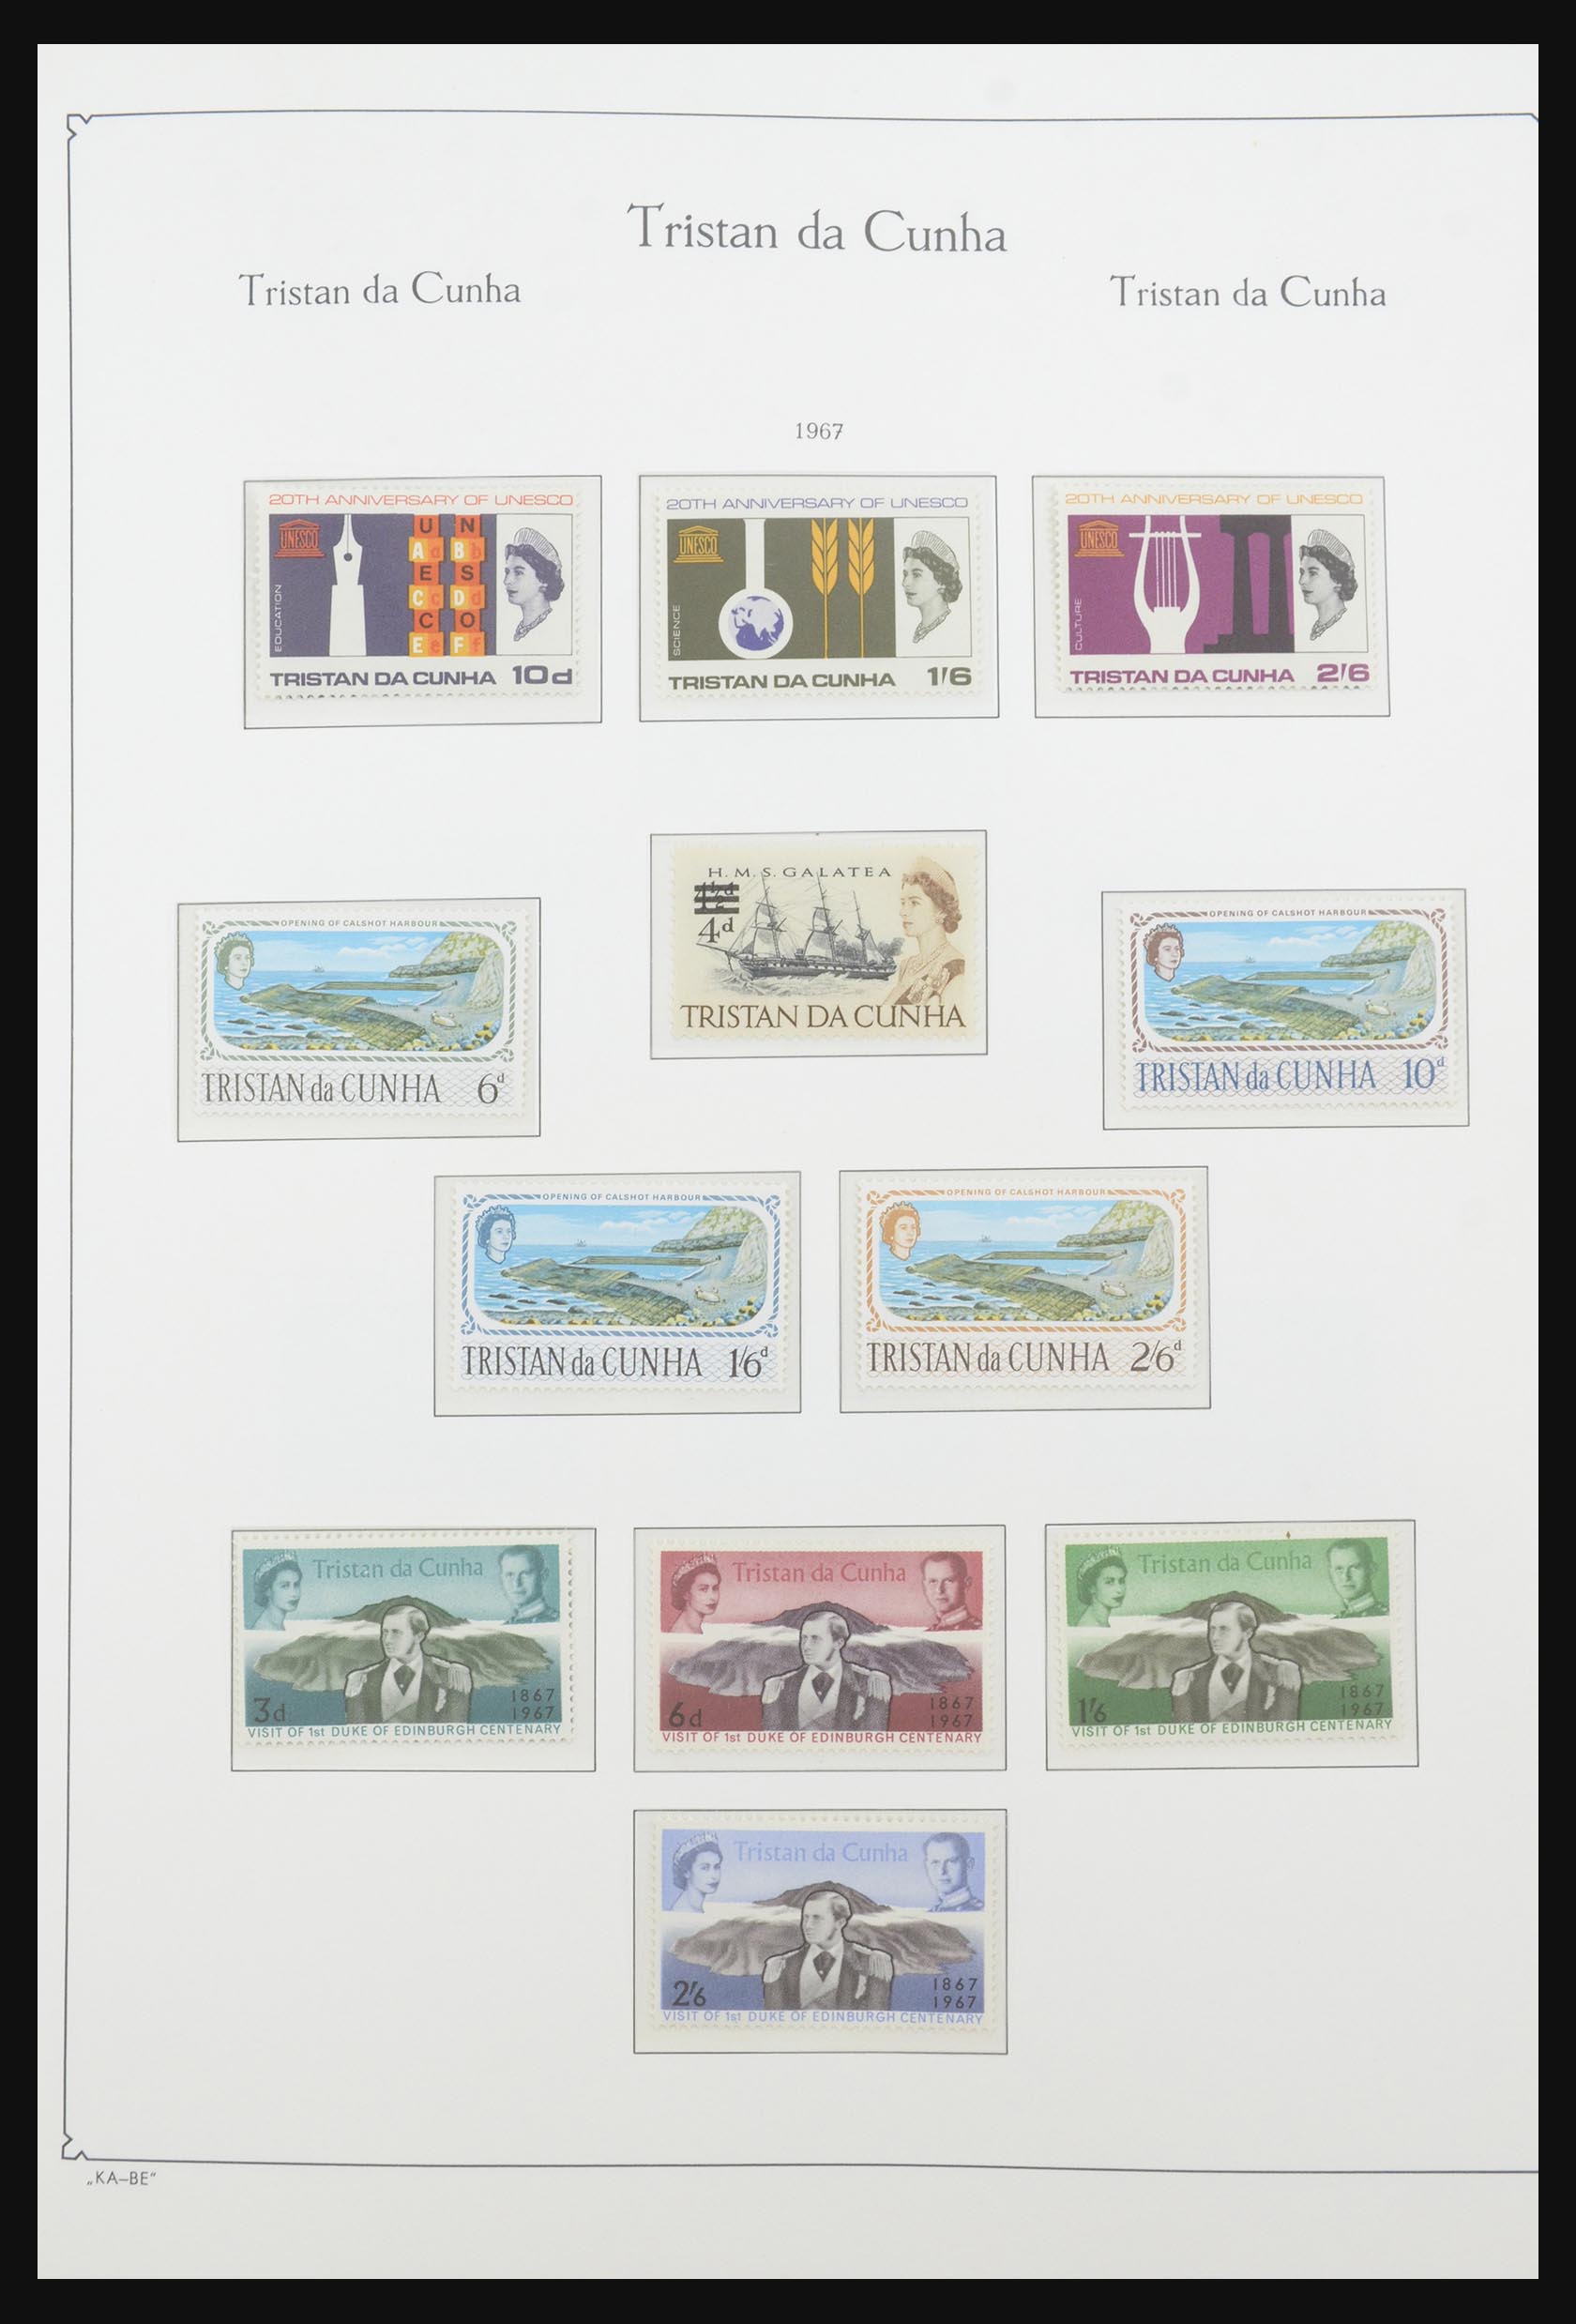 31692 009 - 31692 Tristan da Cunha 1952-2010!